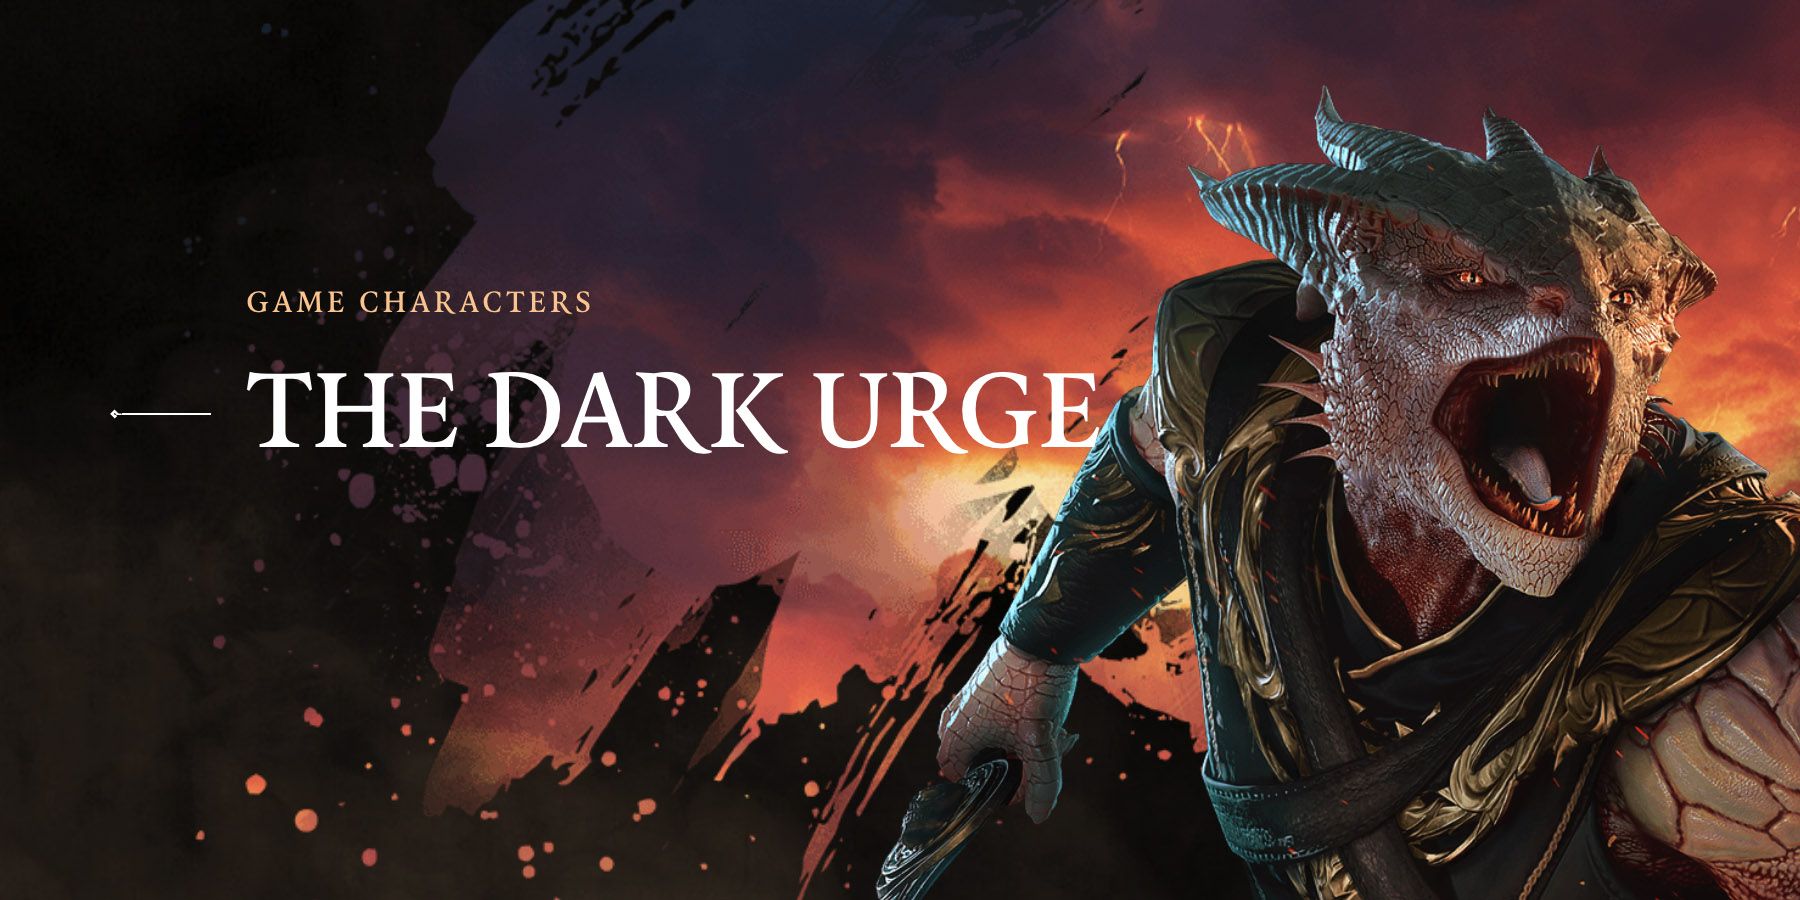 The Dark Urge in Baldur’s Gate 3